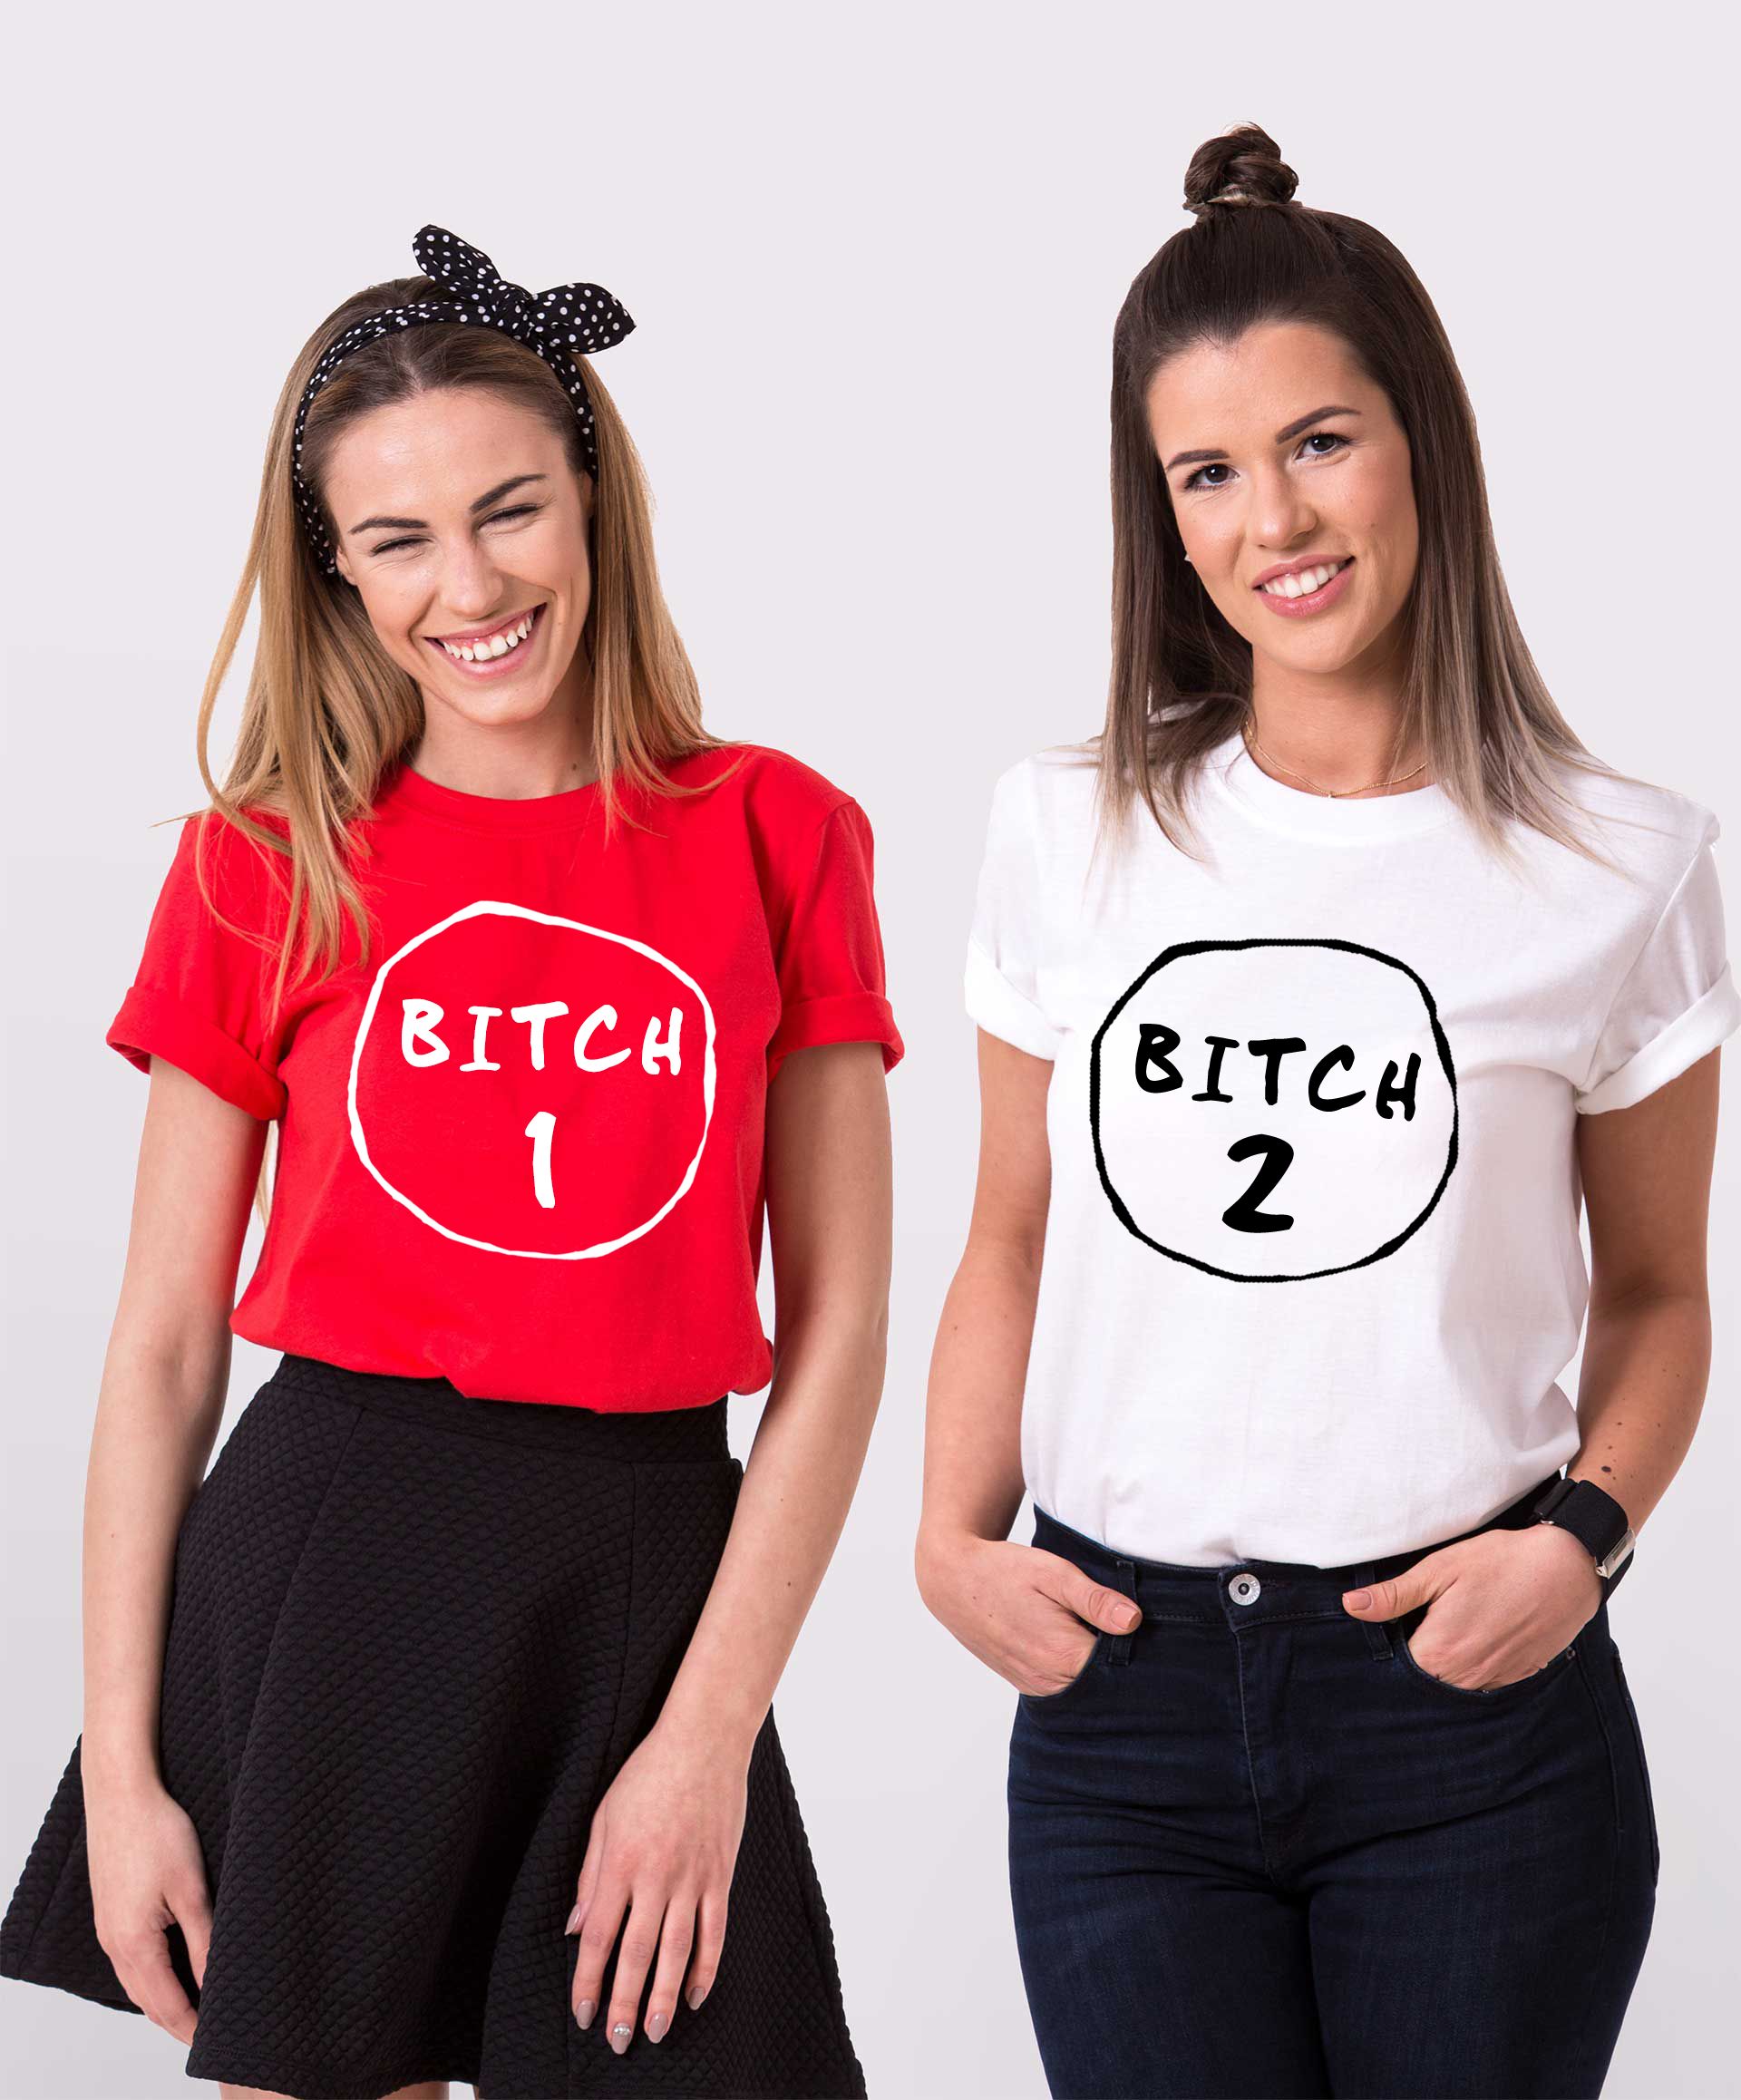 Springe Ryg, ryg, ryg del brugt Bitch Shirt, Bitch 1, Bitch 2, Matching Best Friends Shirts